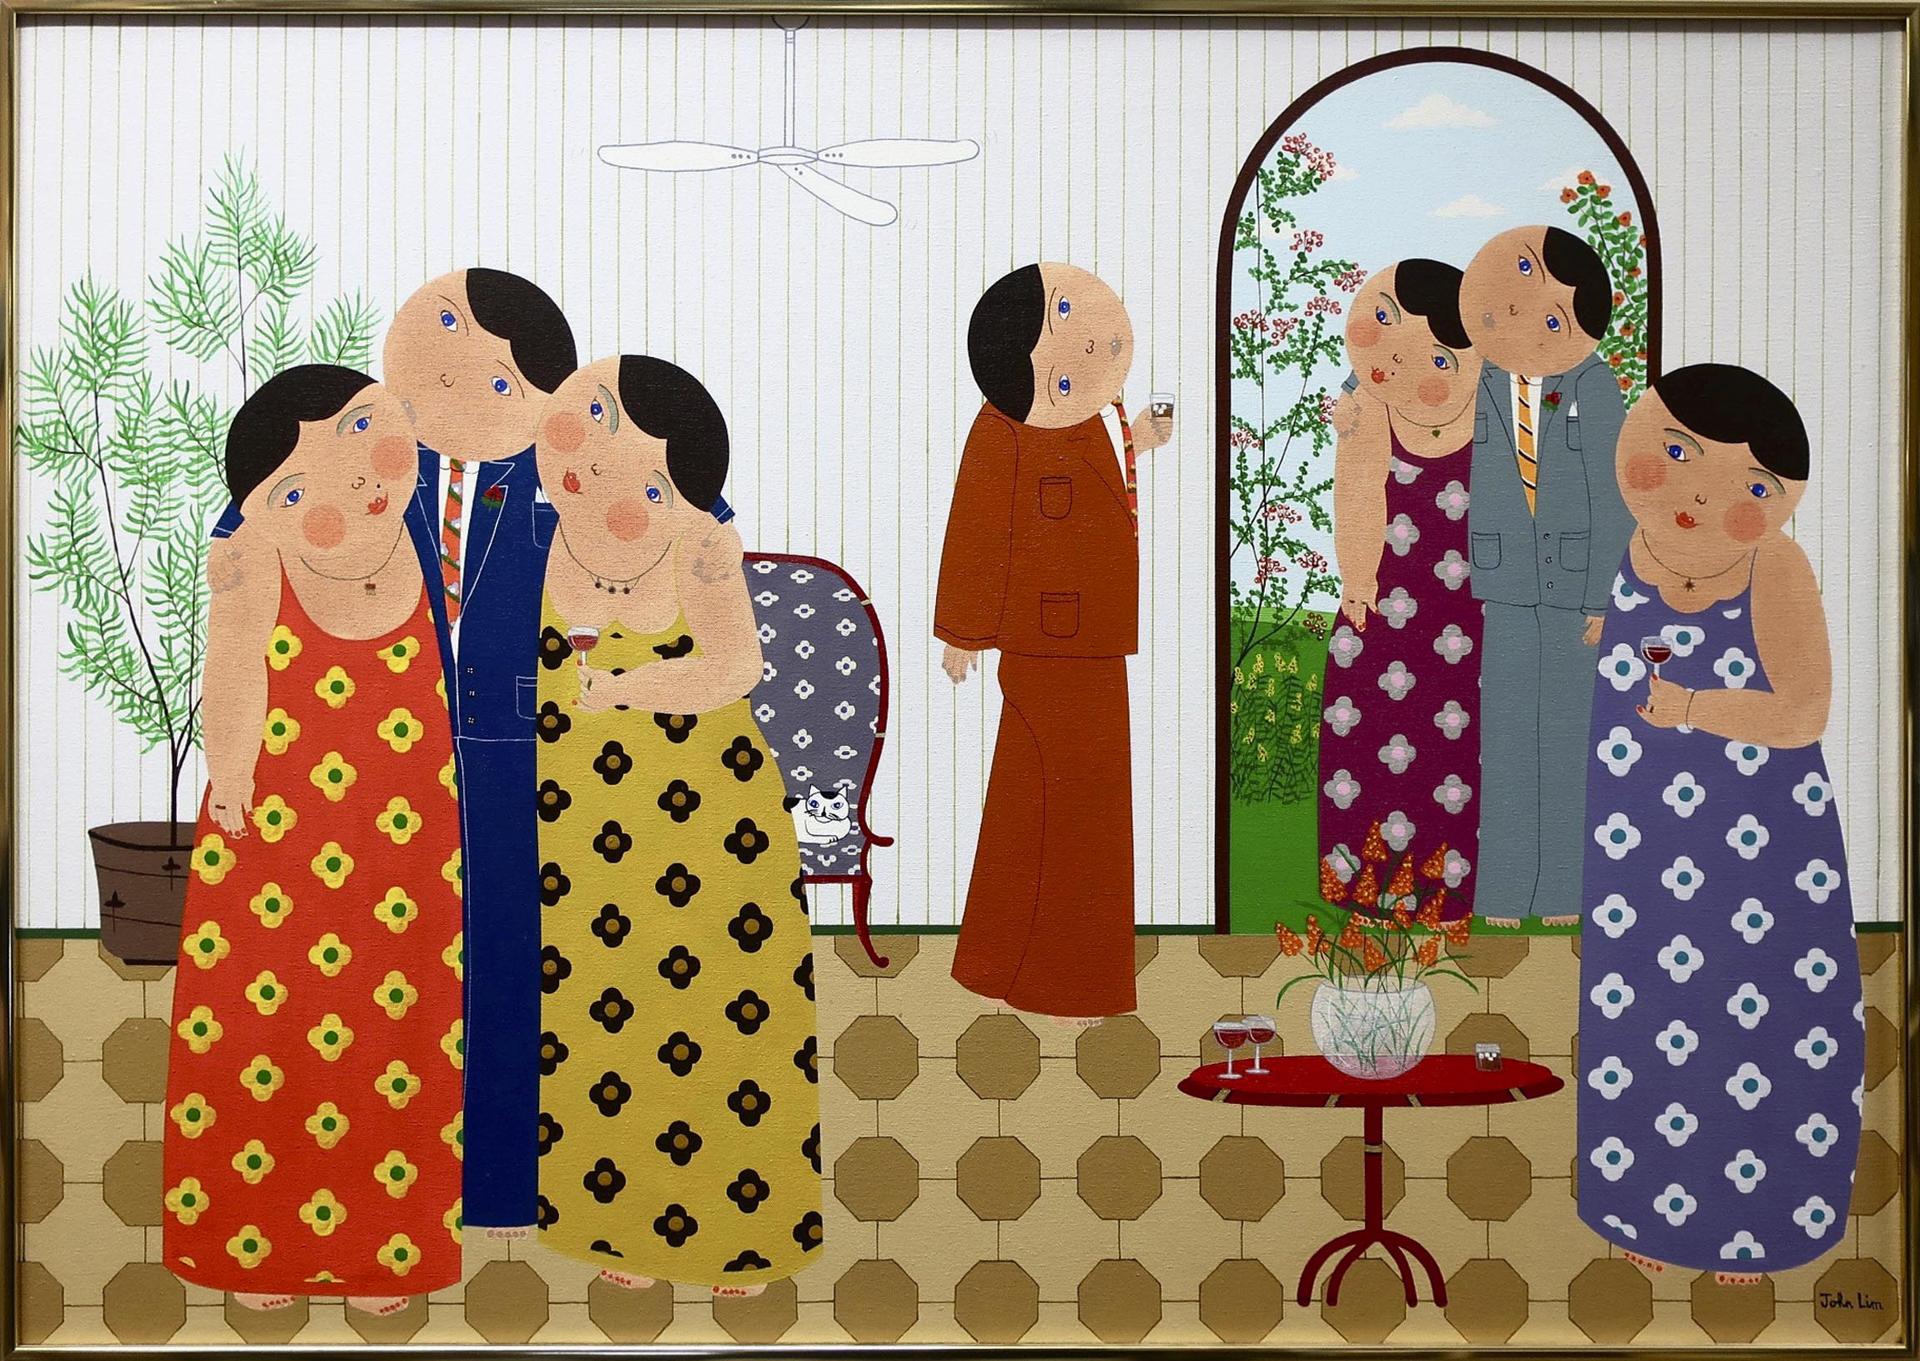 John Lim (1932) - Untitled (A Social Gathering)